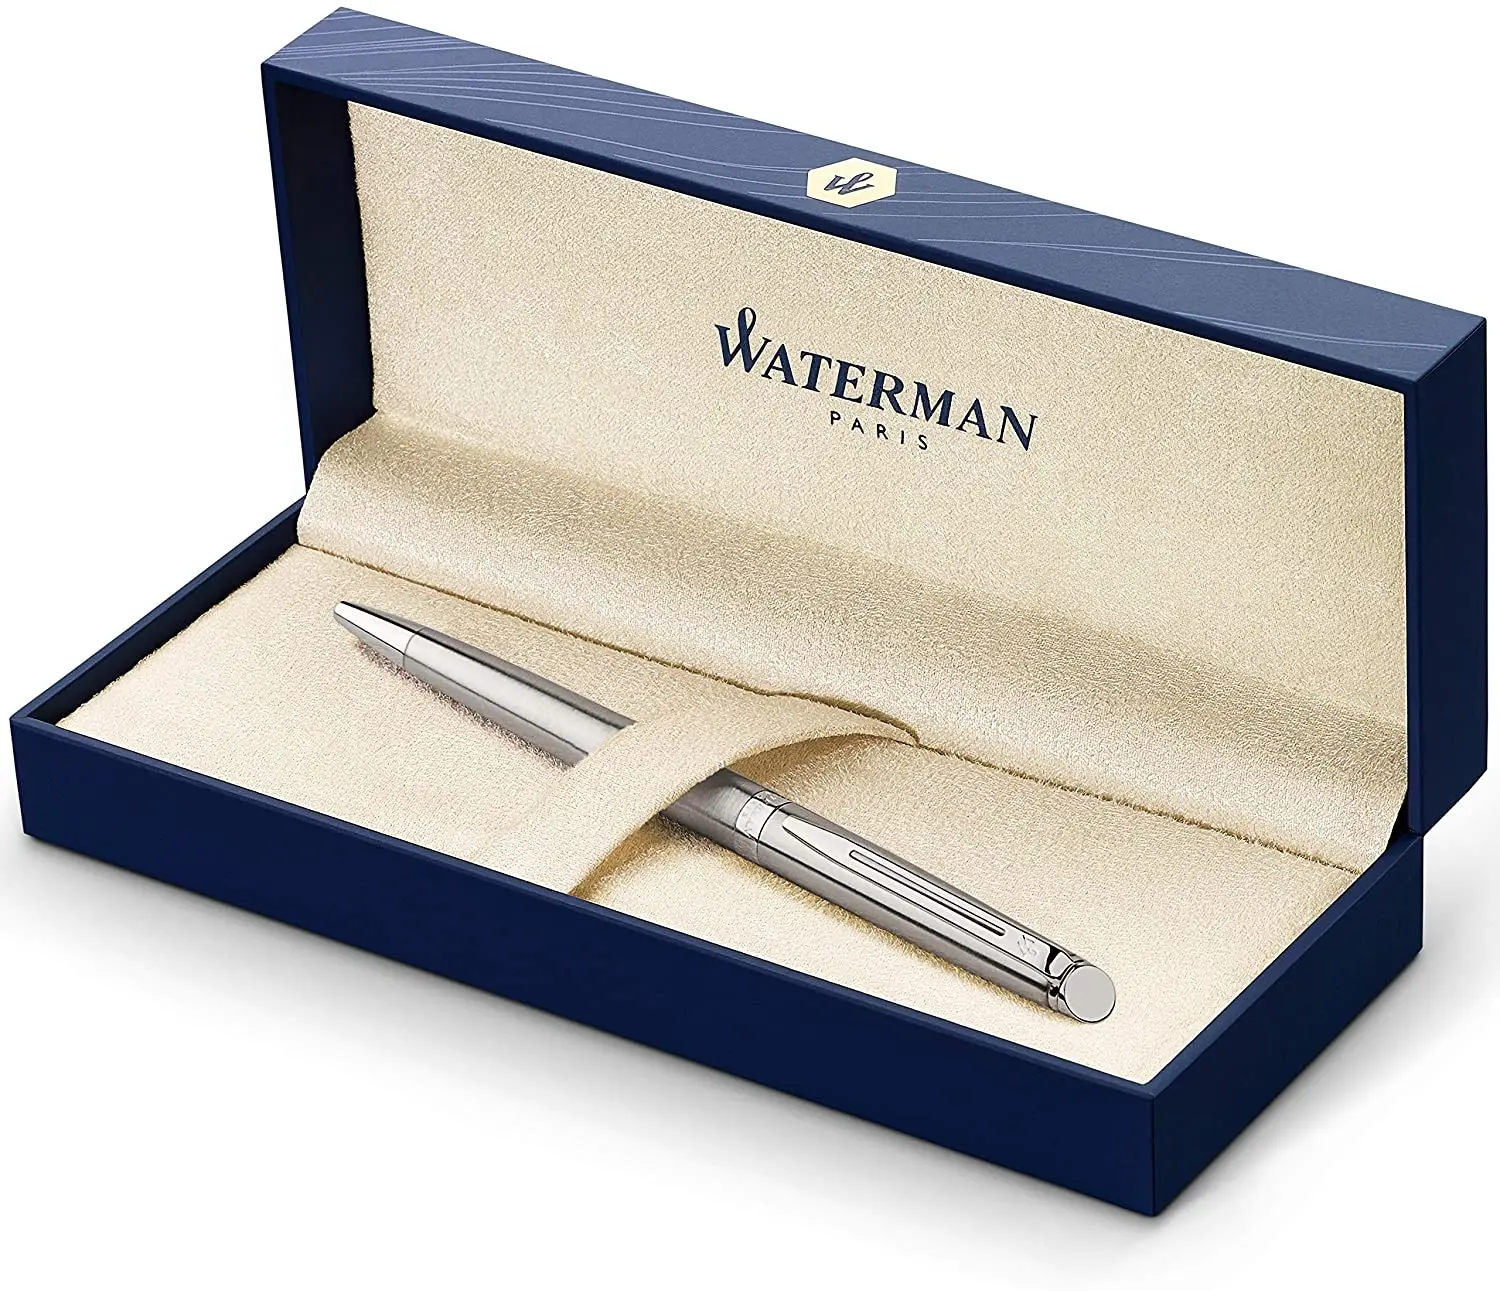 Waterman Ballpoint Pen, Hemisphere Essential , Stainless Steel Gold/Chrome Trim, Gift Box, Original Luxury Pen, Supplies